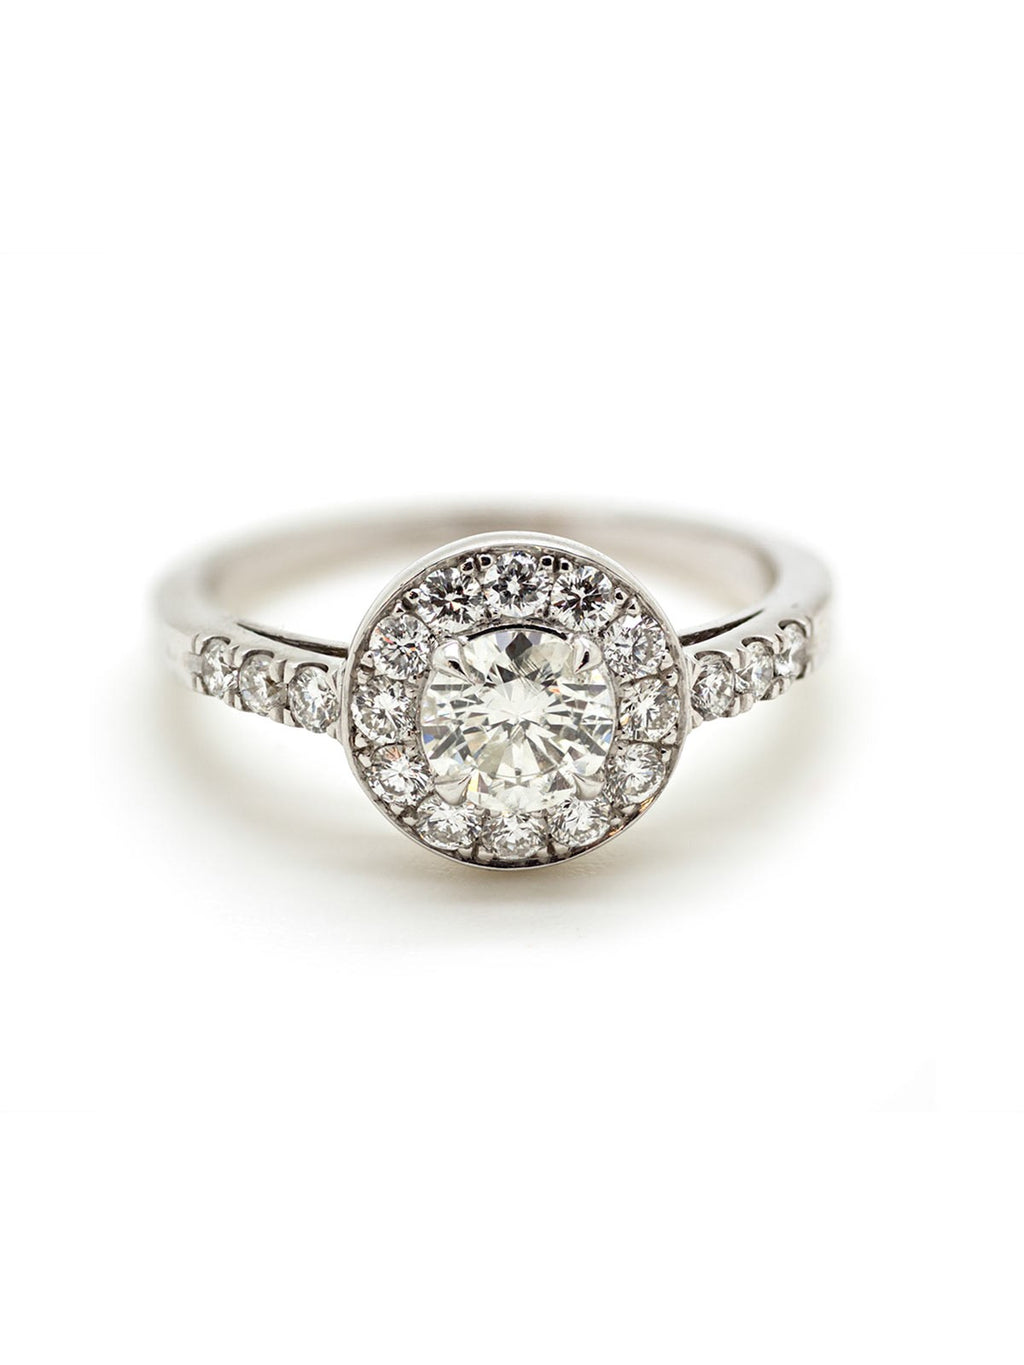 Yaf Sparkle, Round Brilliant Cut Diamond Ring